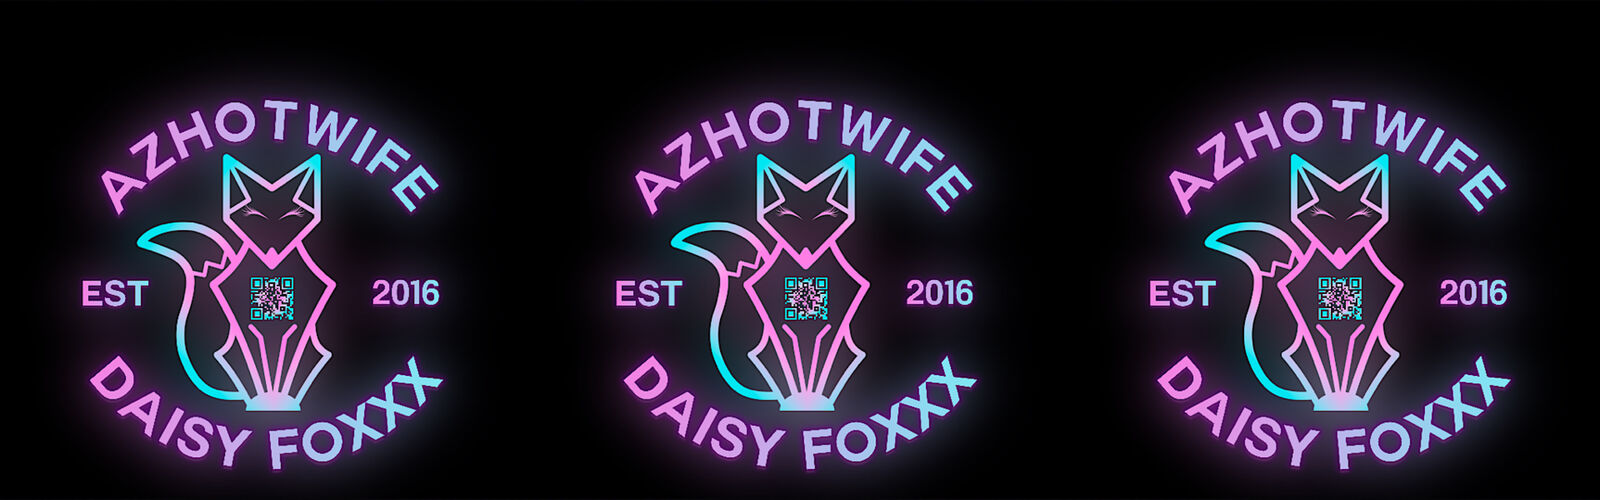 See Azhotwife Daisy Foxxx profile